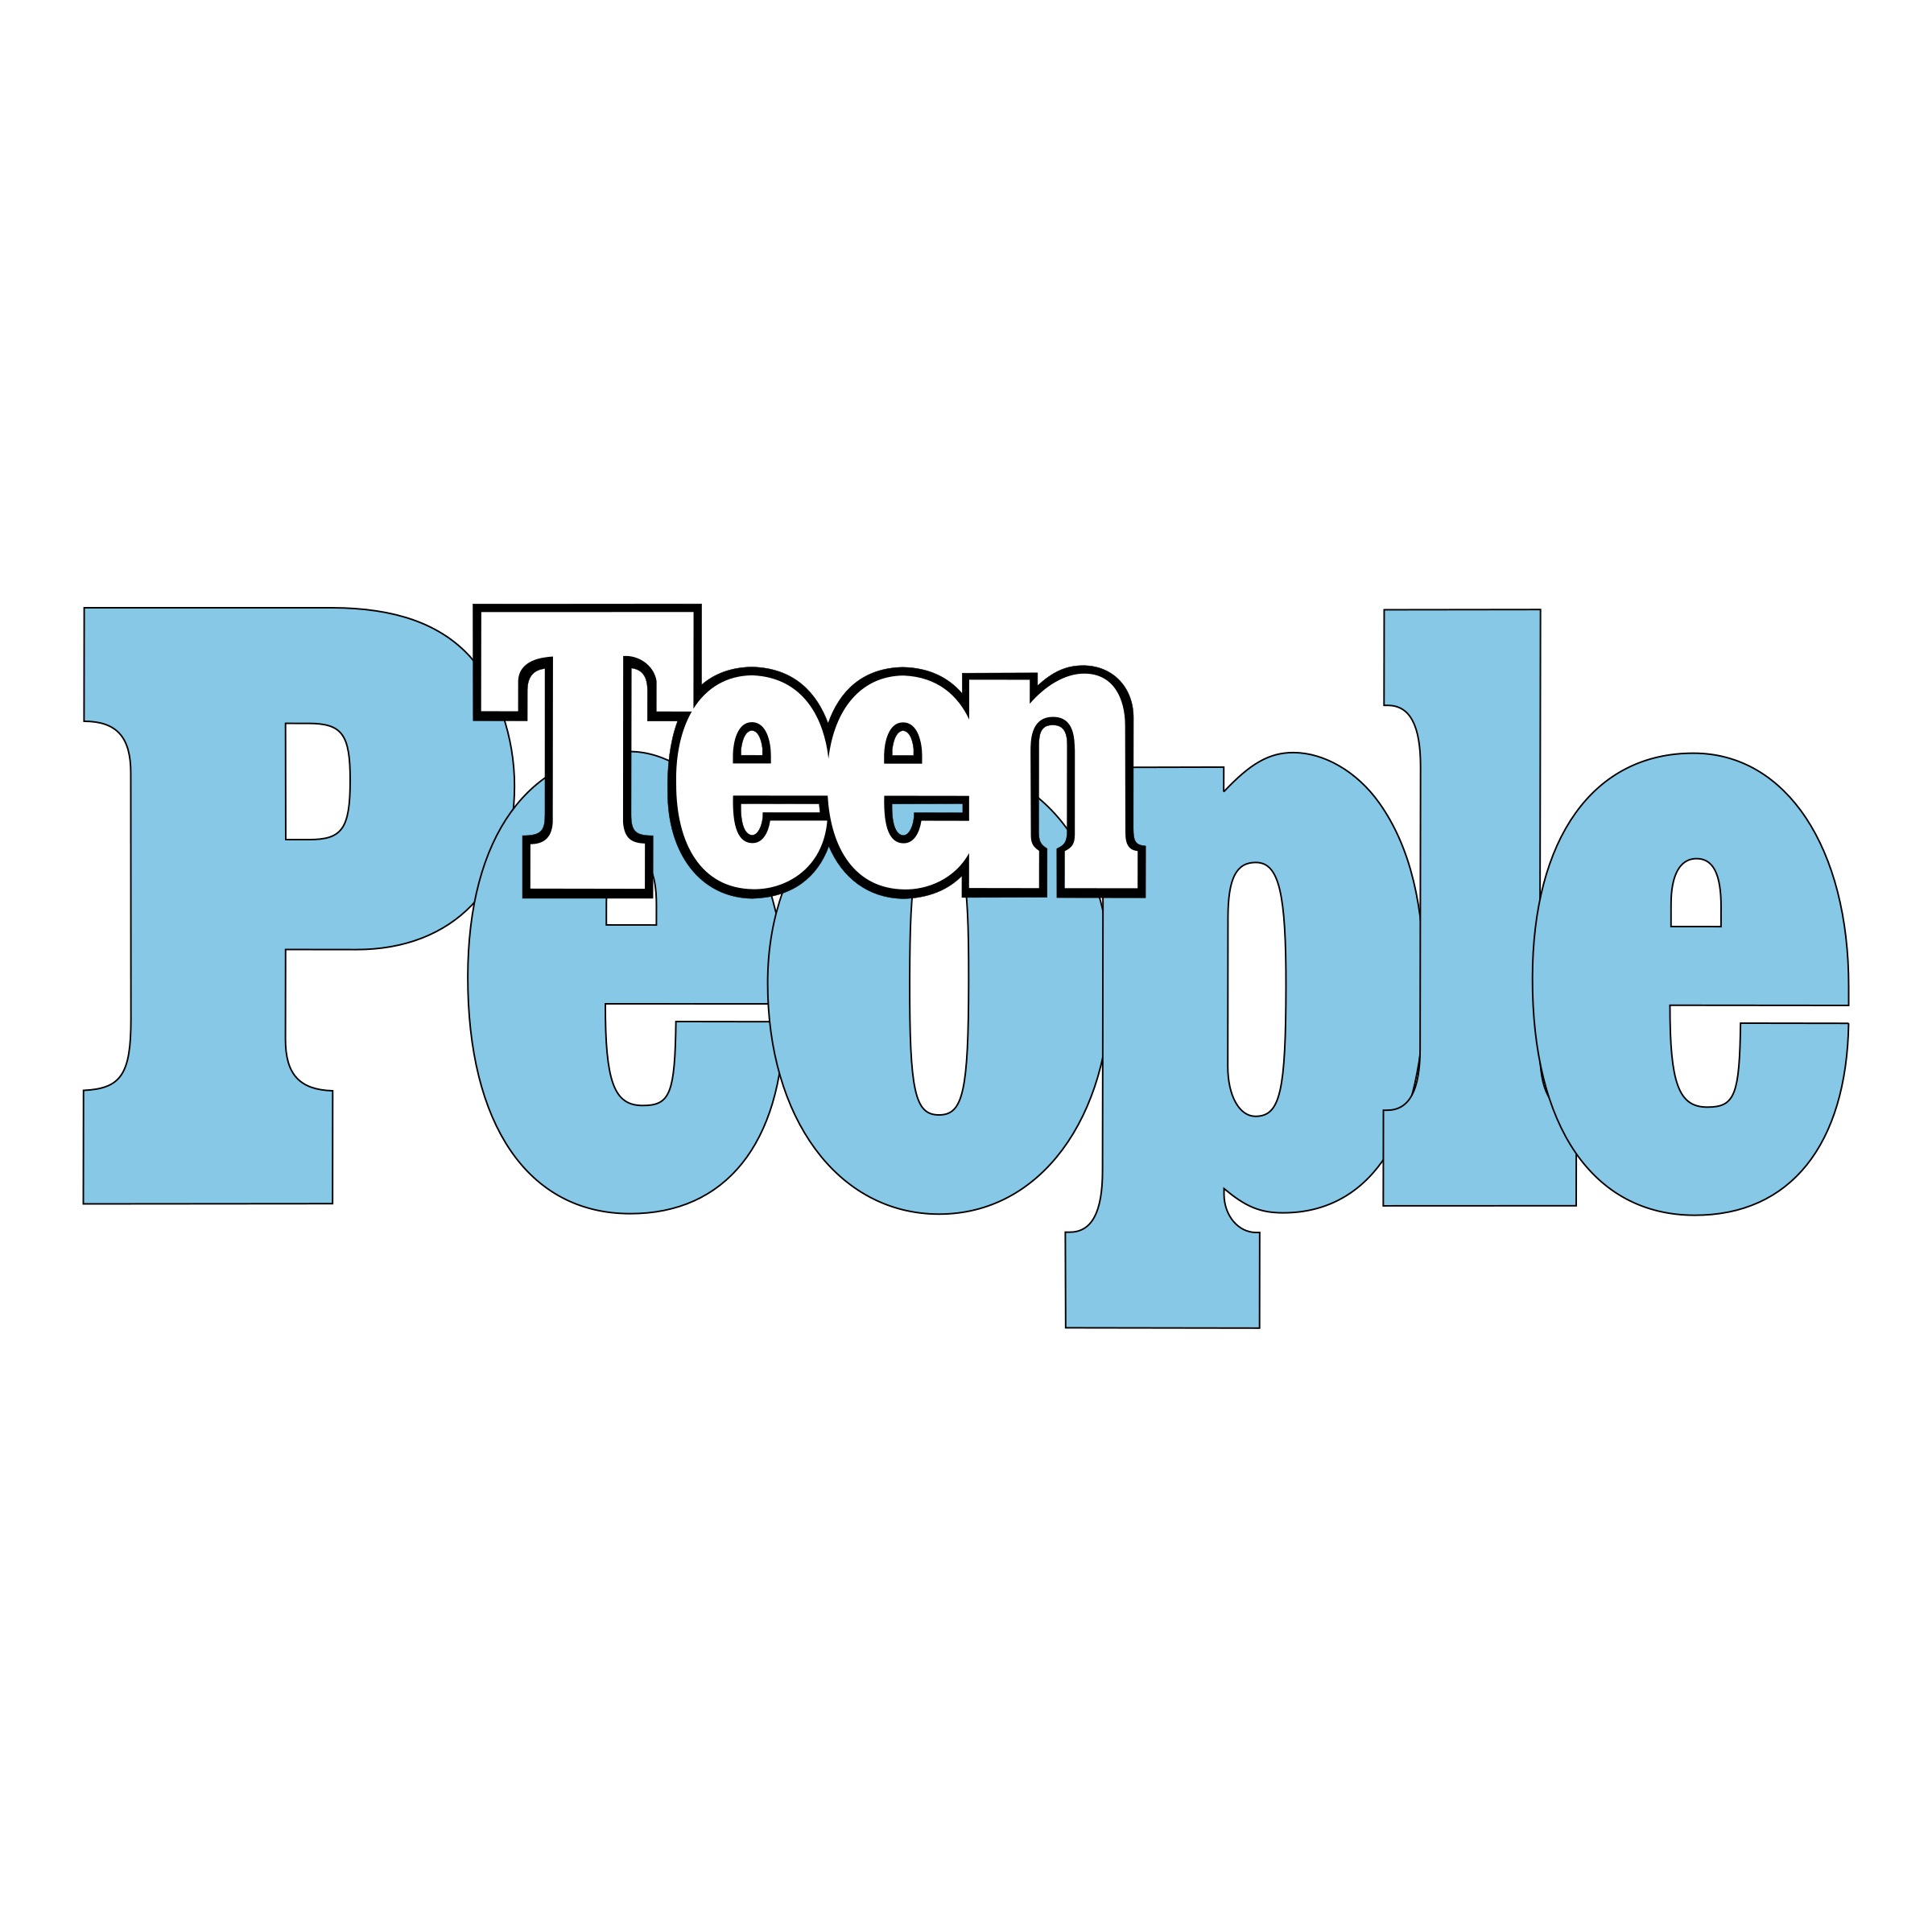 Teen Logo - People Teen Logo PNG Transparent & SVG Vector - Freebie Supply